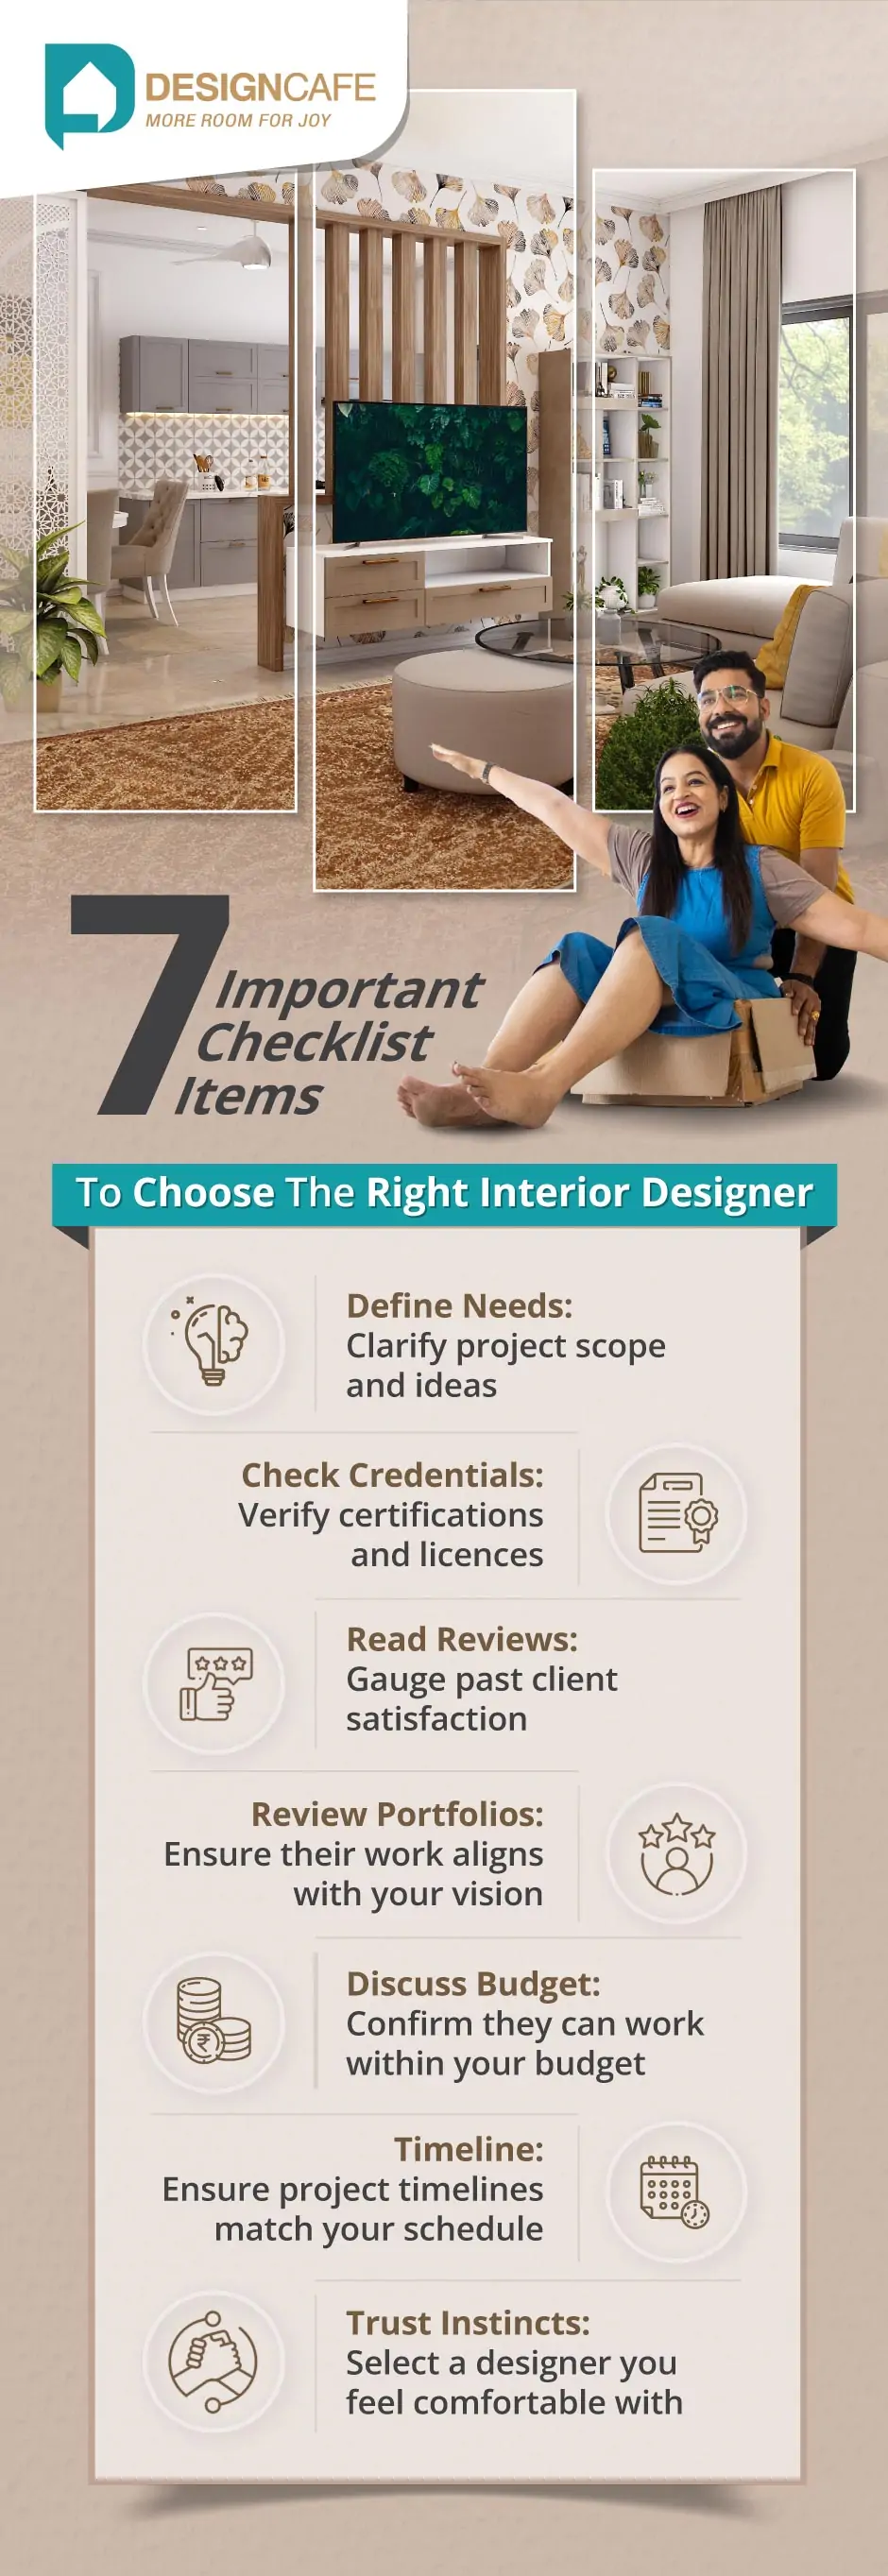 Interior designer checklist: Portfolio, references, budget, style, communication, timeline, contract clarity.